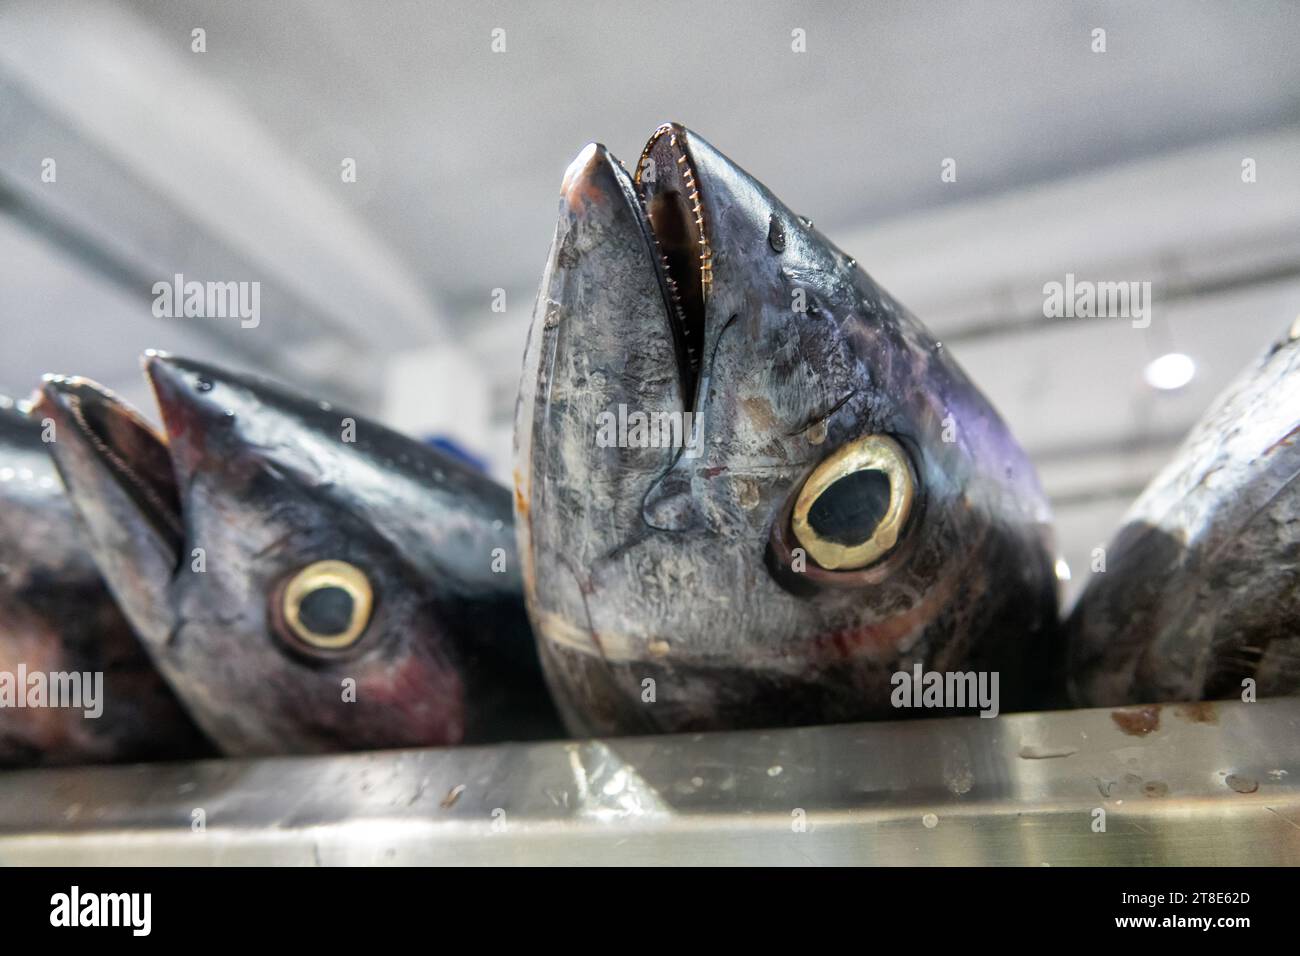 Bandar Abbas, Iran. Fish market. The fish of the Persian Gulf and the Arabian Sea are caught and sold. tuna (Thunnus) Stock Photo